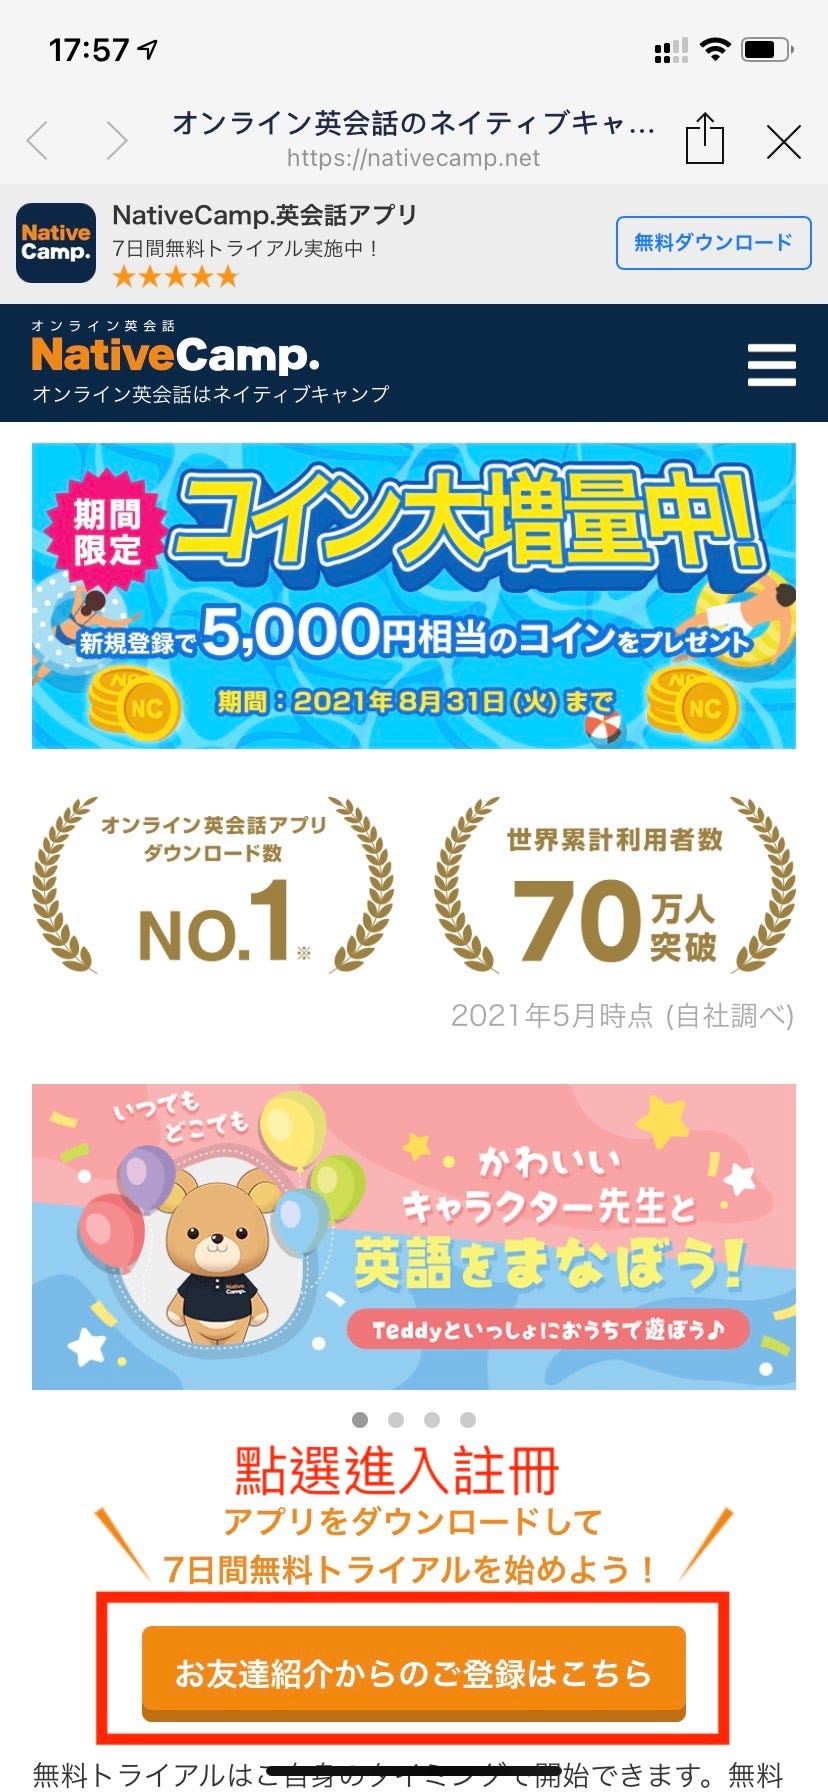 Fw: [資訊] NativeCamp 2月等值7000日圓優惠 FB社團